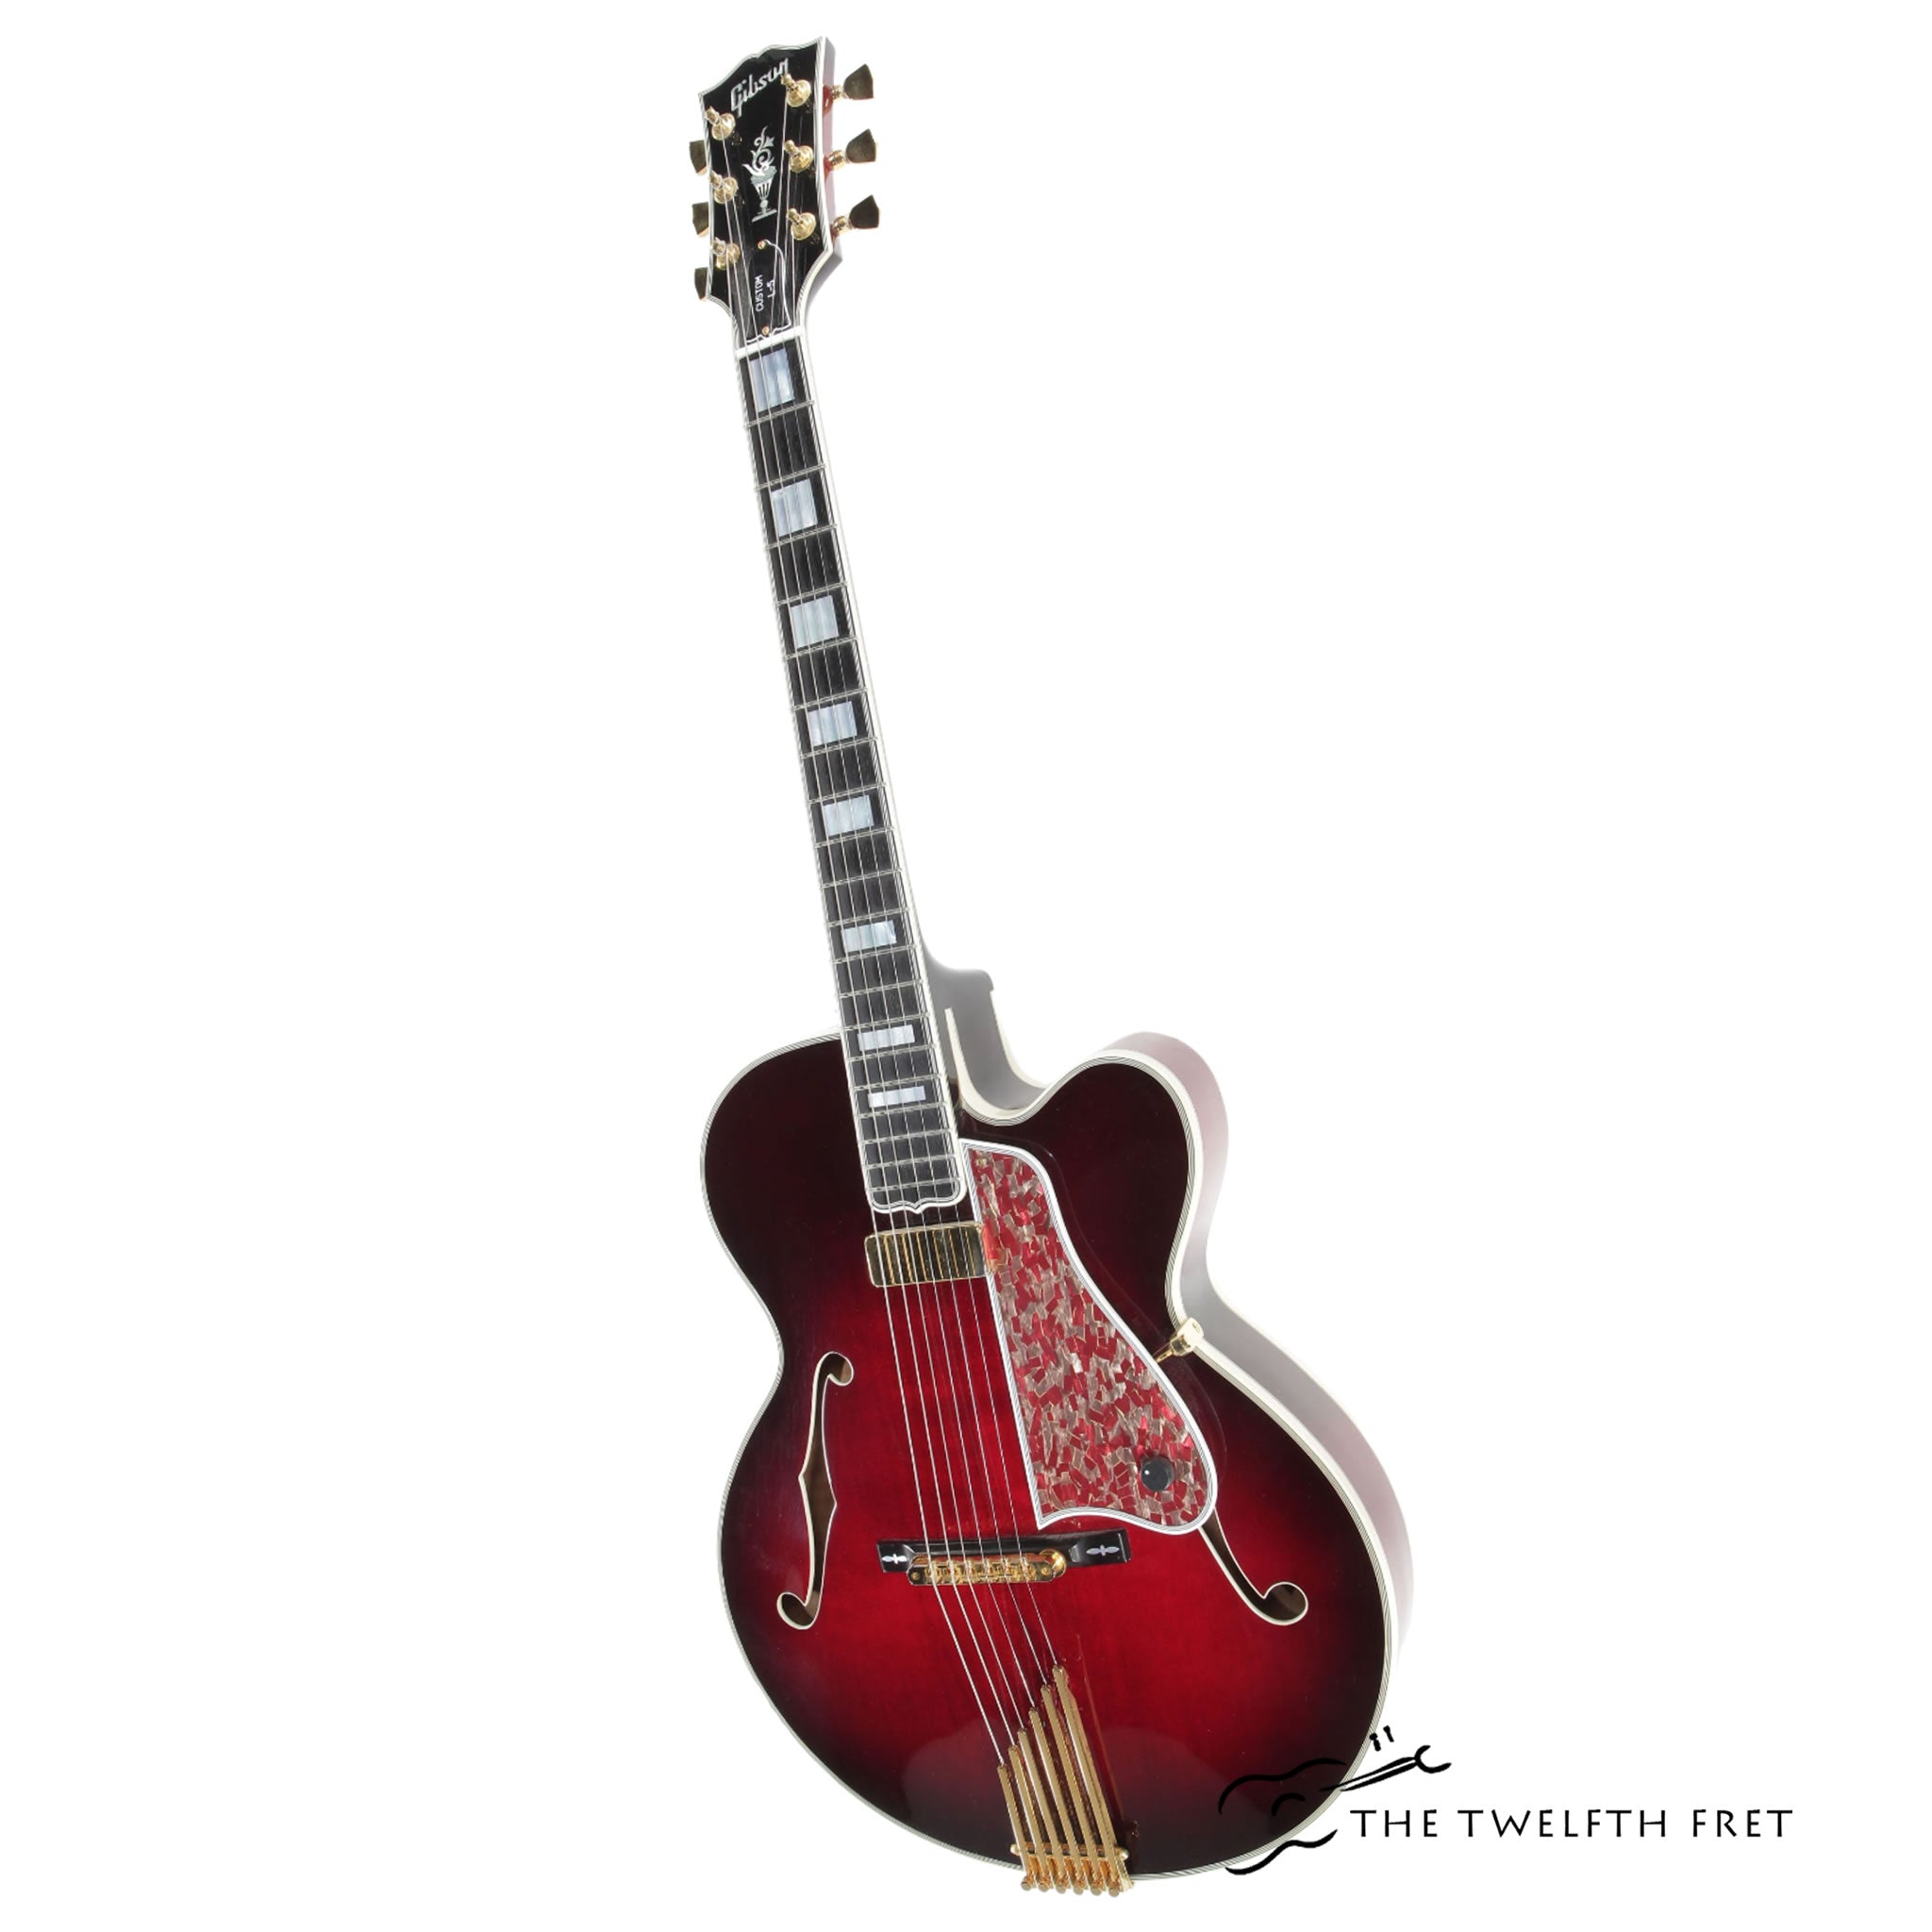 Gibson Custom L-5 Signature Archtop Electric Crimson, 2012  - The Twelfth Fret